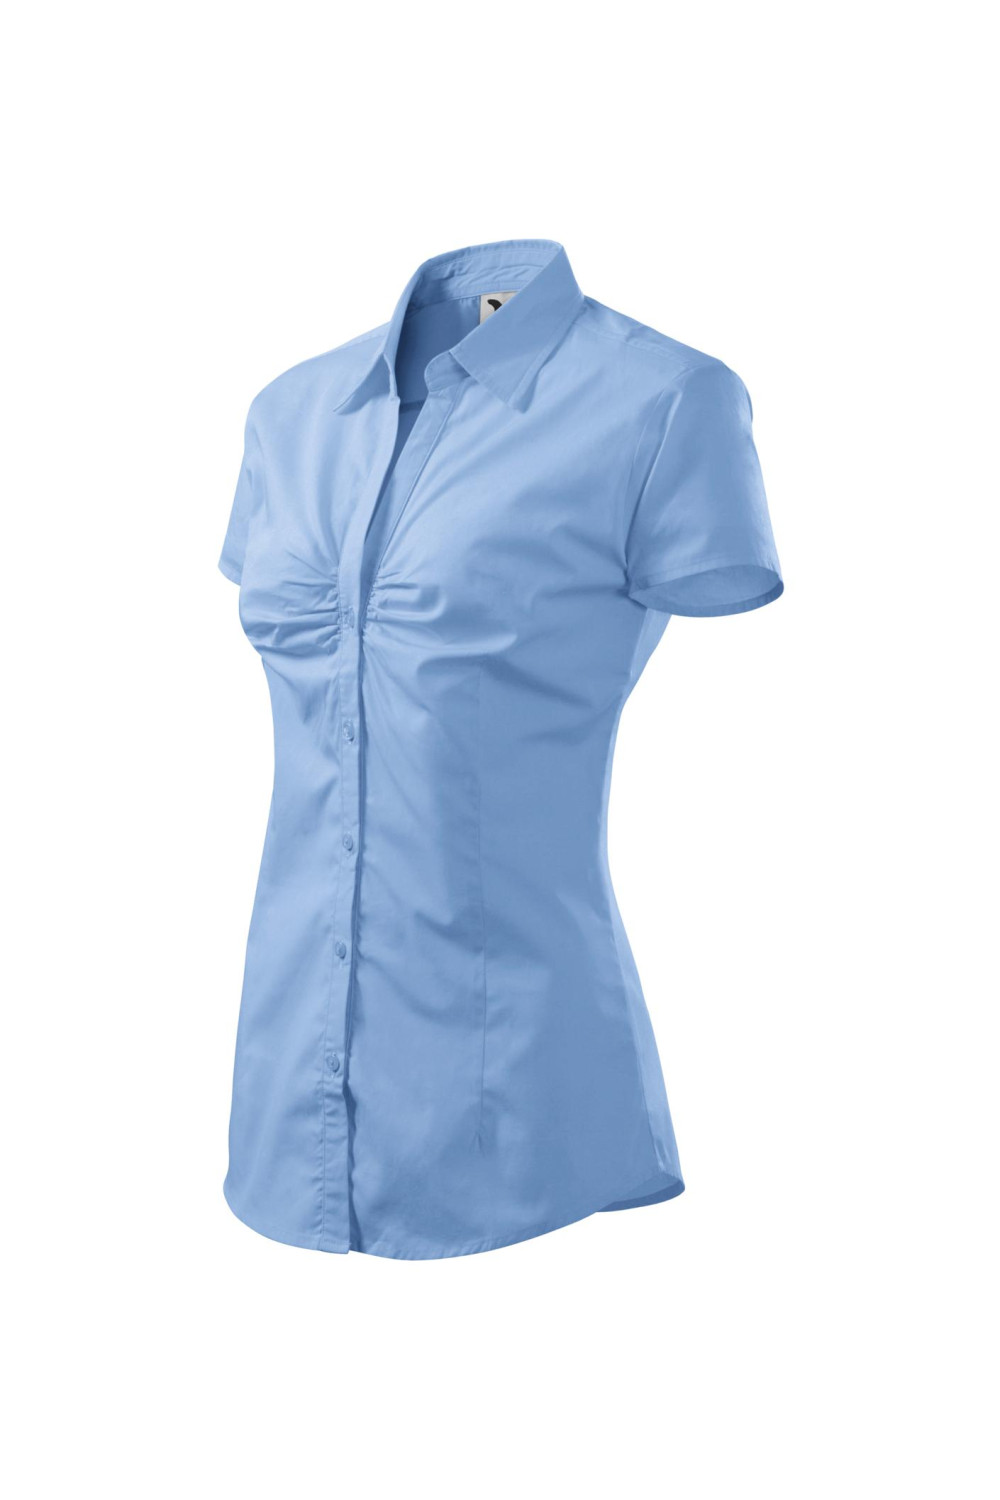 Koszula damska krótki rękaw 100% bawełna CHIC 214 koszule błękit